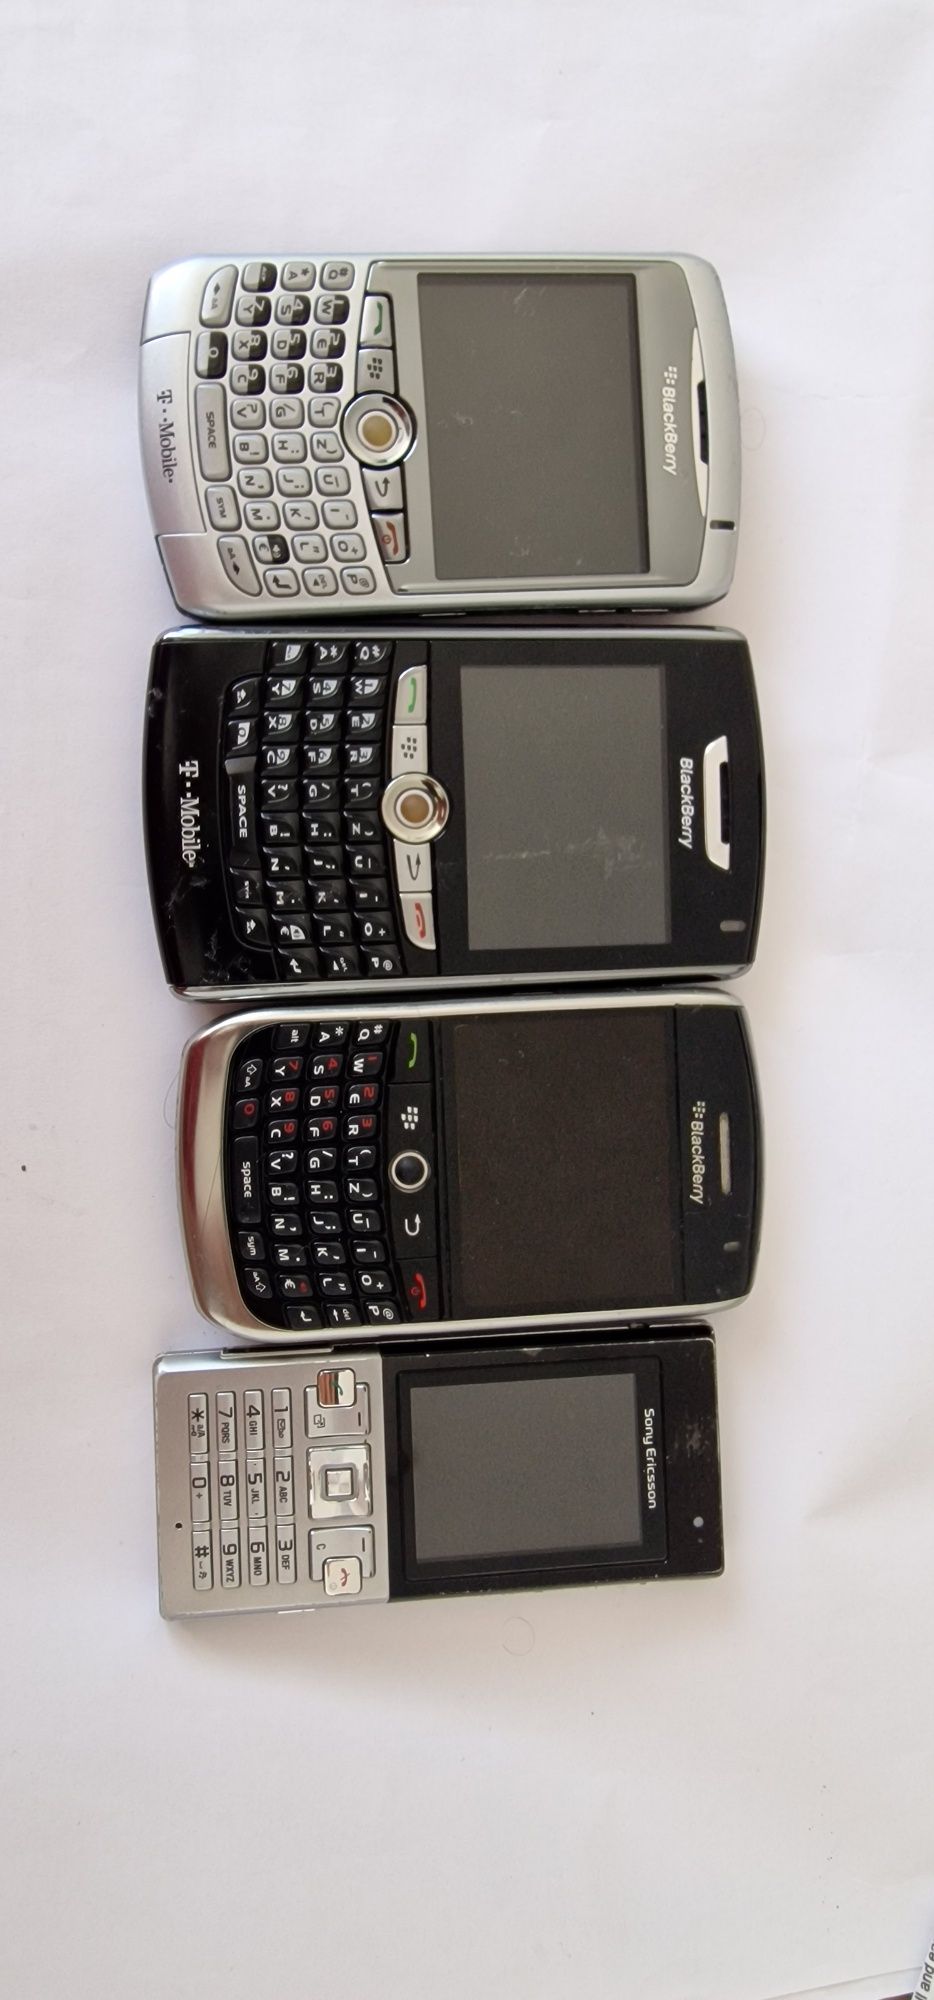 Nokia, Samsung, Sony Ericsson,Blackberry